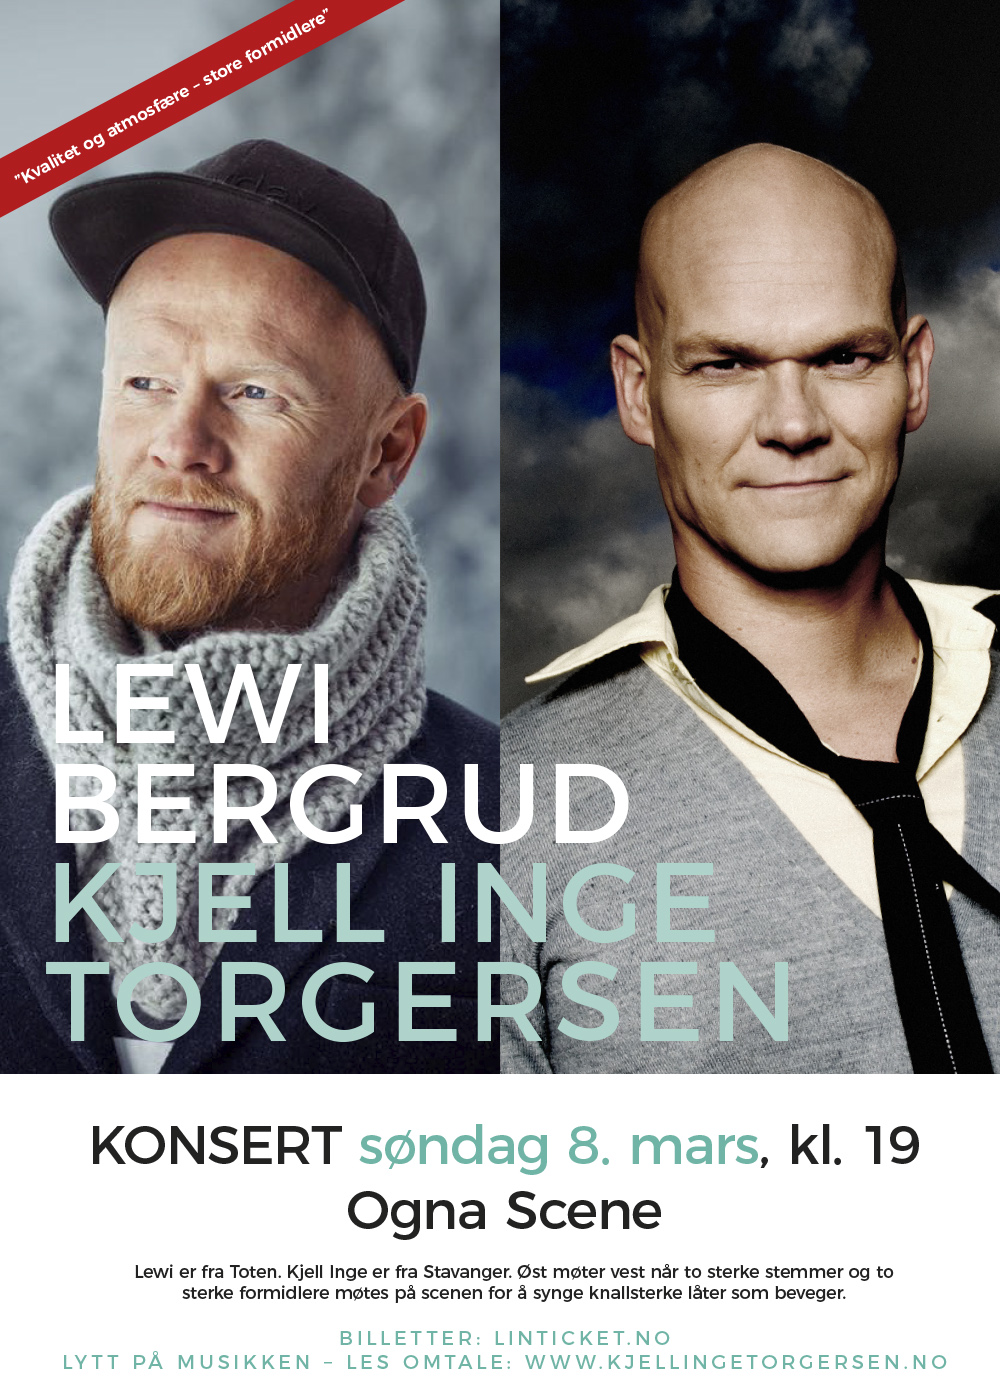 Lewi Bergrud + Kjell Inge Torgersen